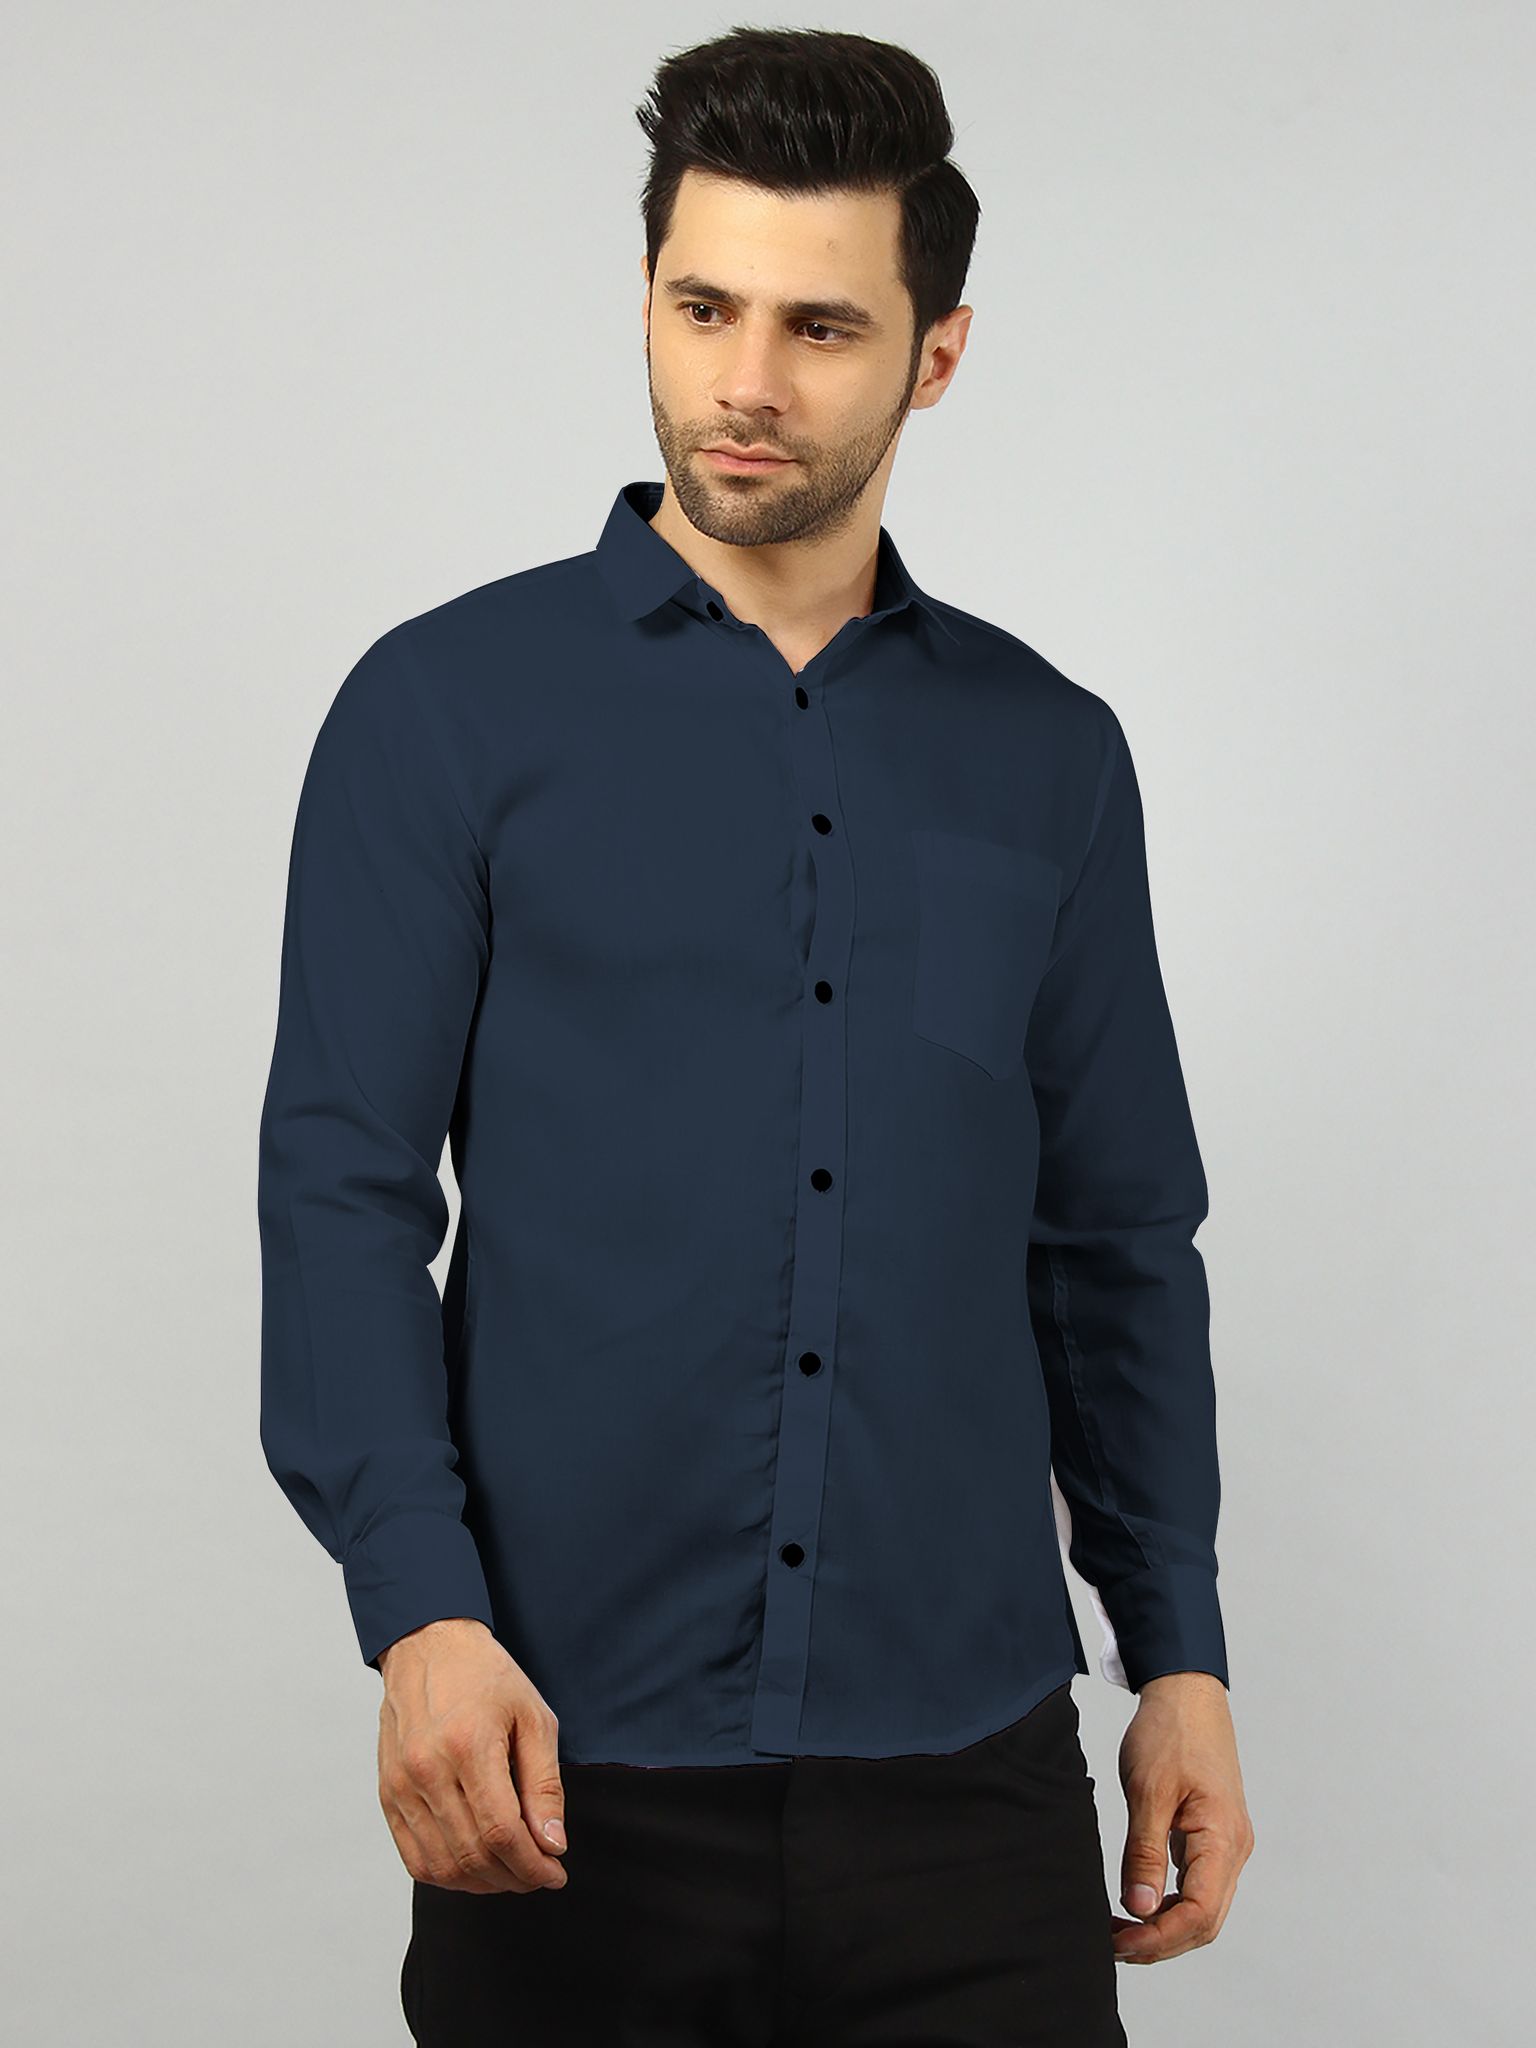 Casual Shirt for Men Navy Blue